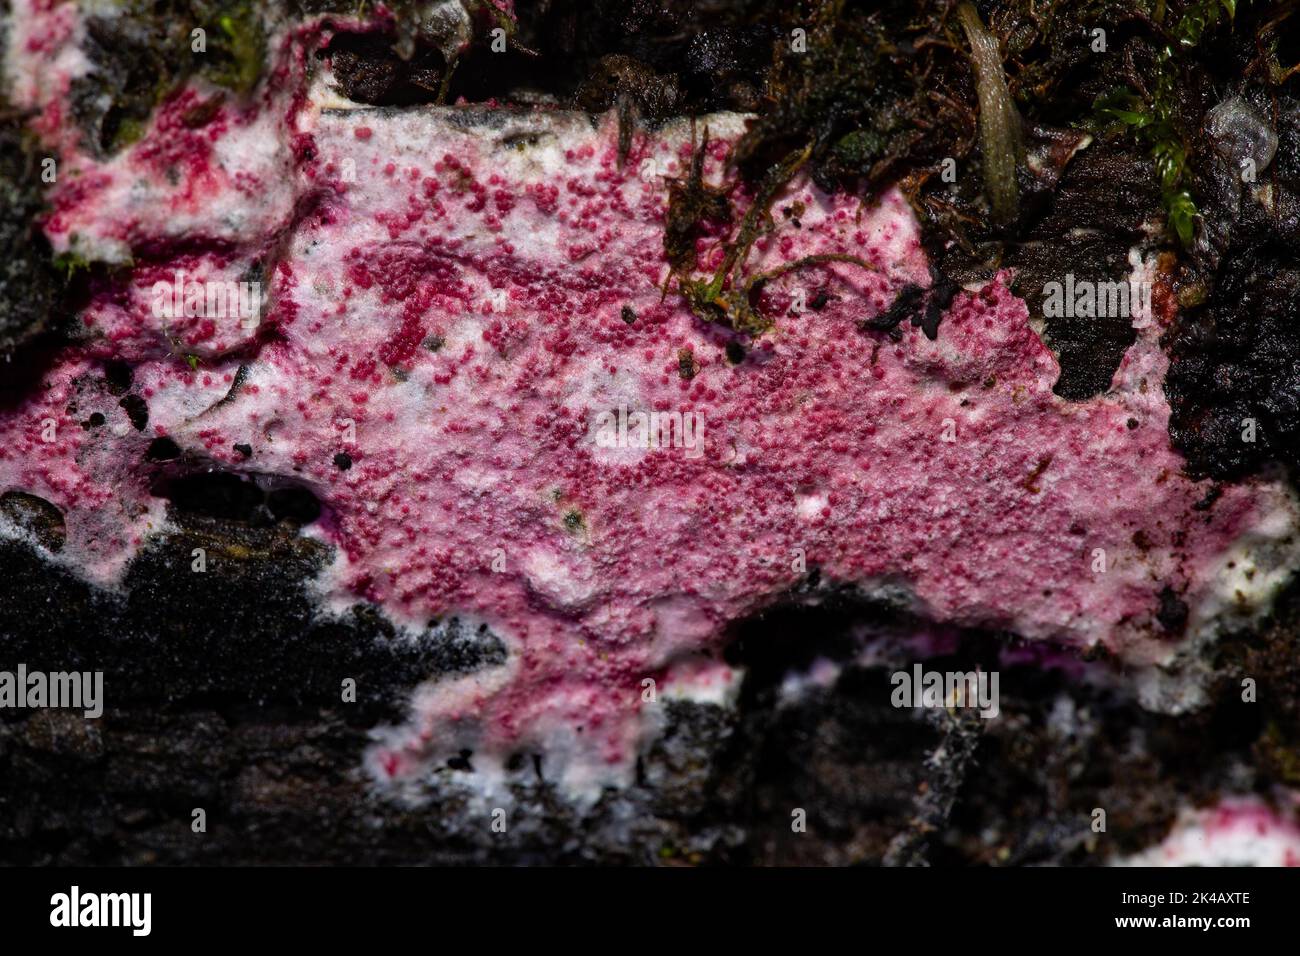 Pink parasitic pustule fungus crimson fruit body on tree trunk Stock Photo